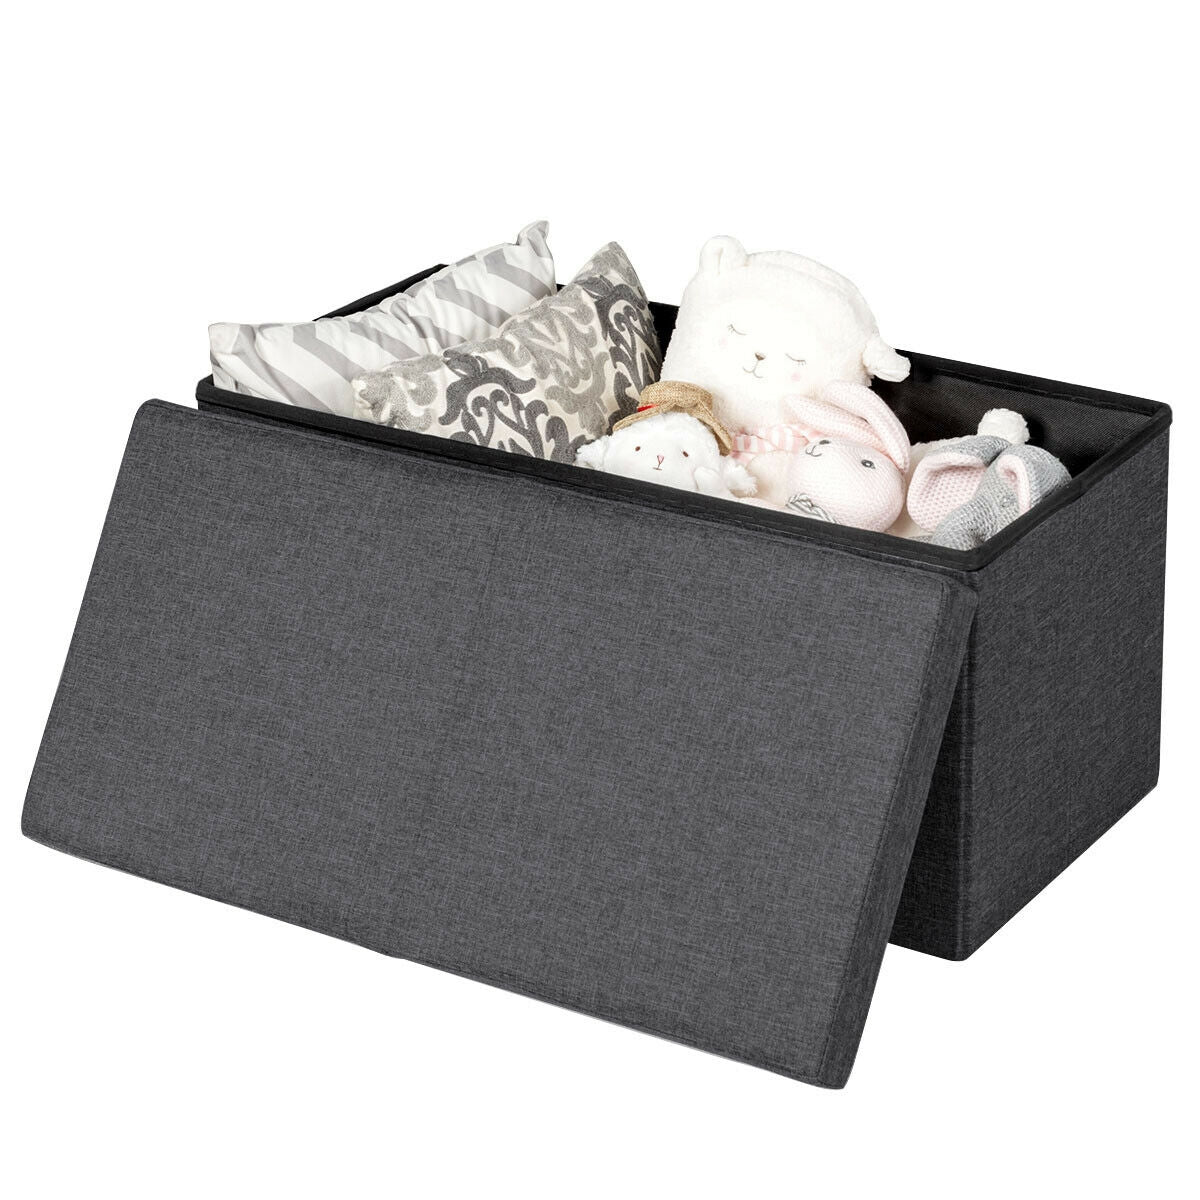 30 Inch Folding Storage Ottoman with Lift Top-Dark Gray